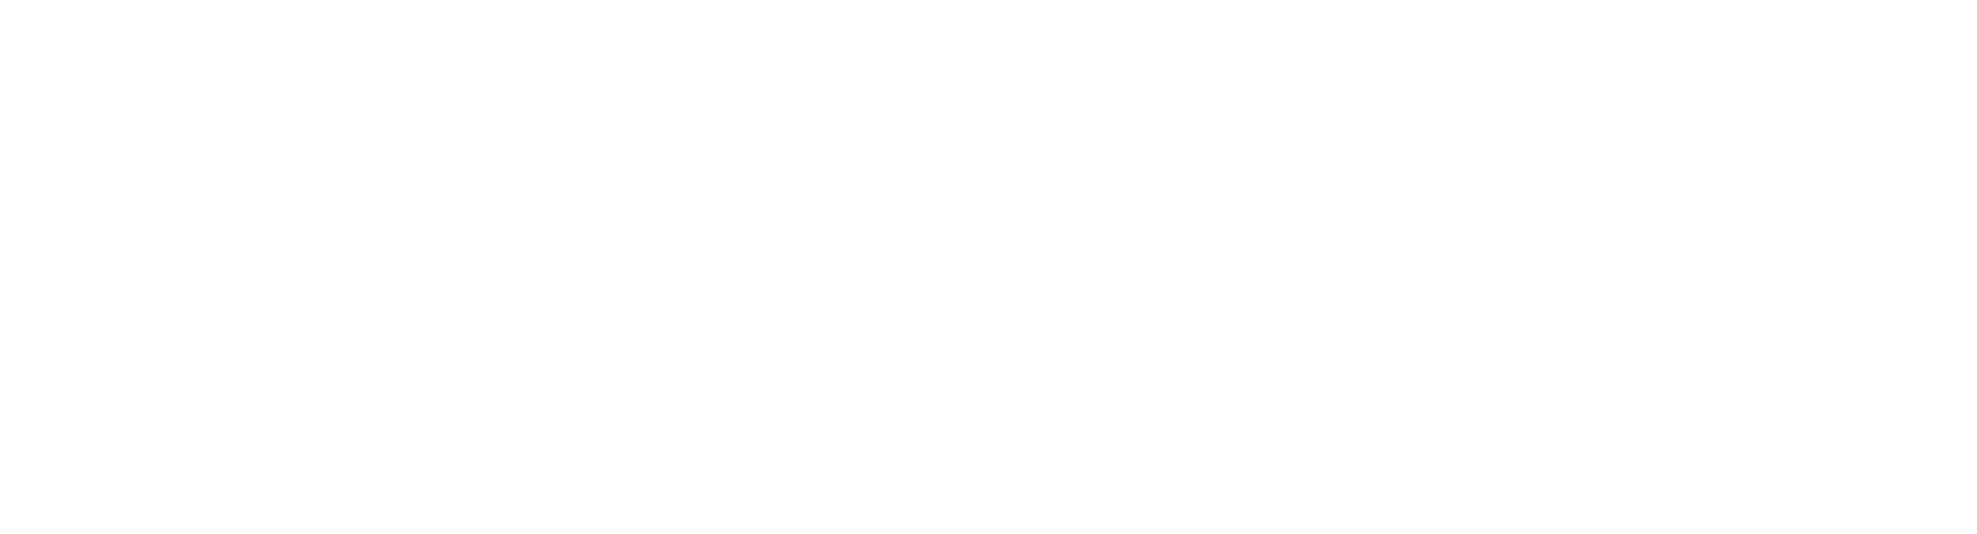 ECO2Blast is an AquaBlast company